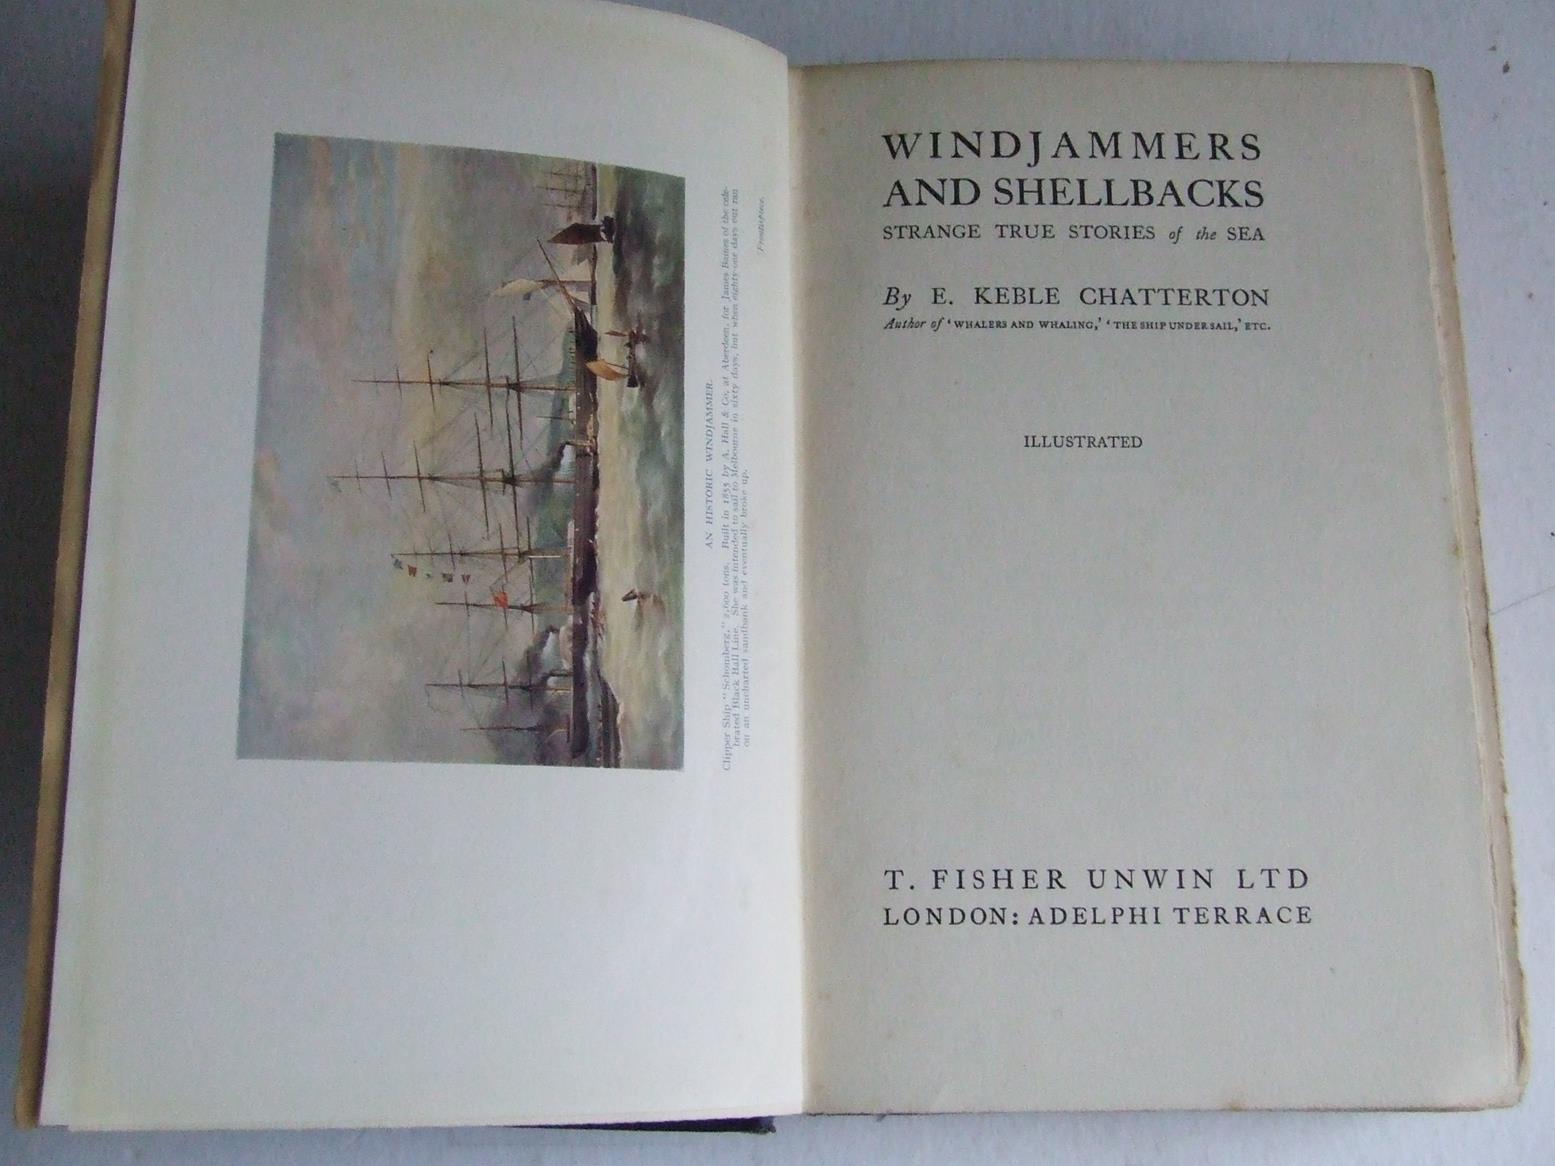 Windjammers and Shellbacks, strange true stories of the sea